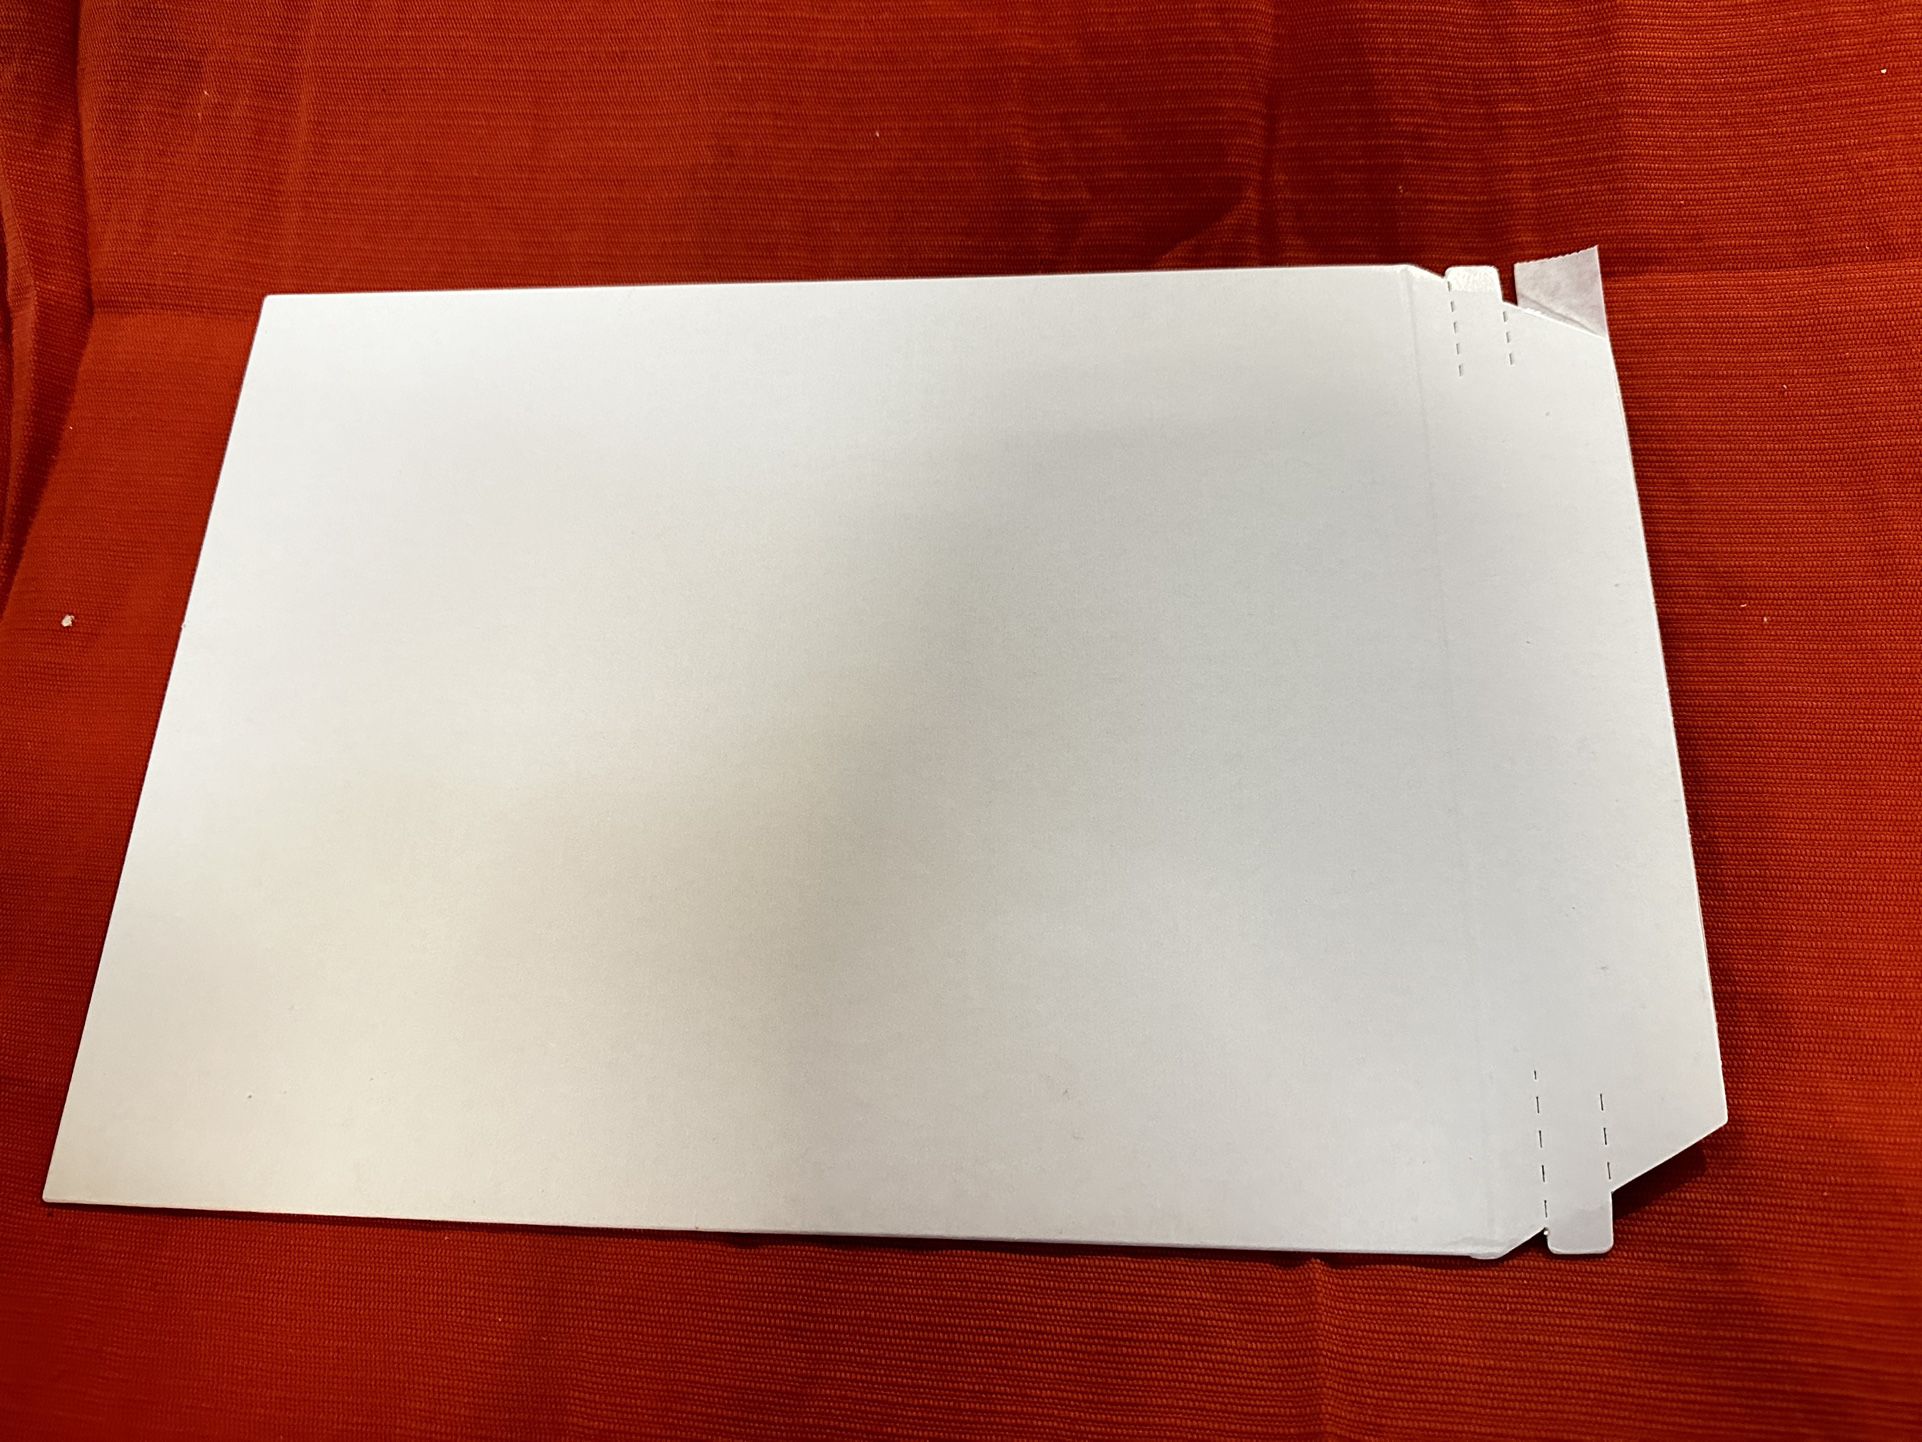 White Self-Seal Stay Flat Shipping Envelopes